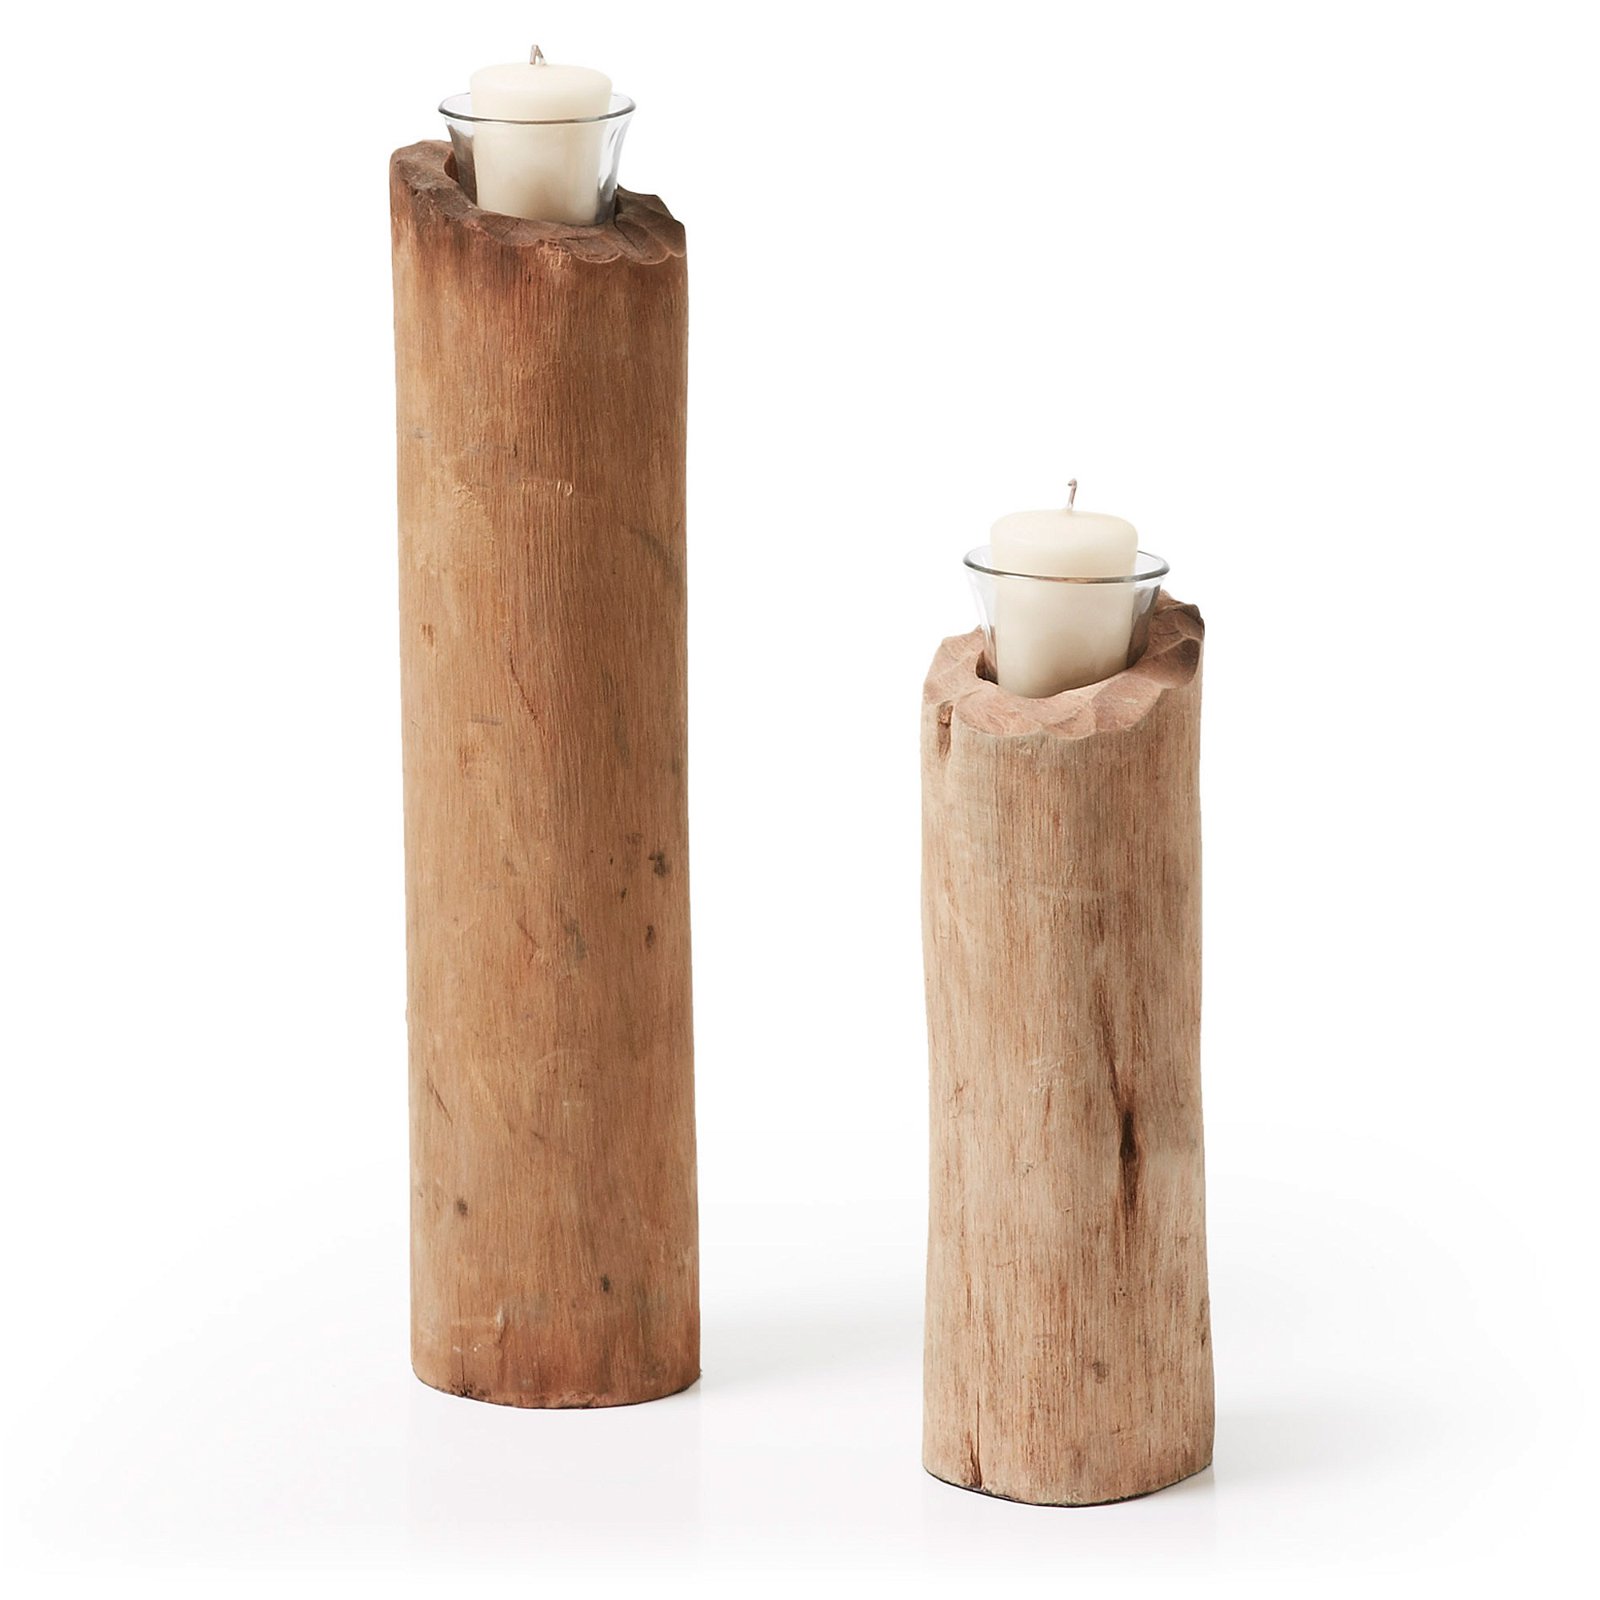 Set de 2 candeleros en forma de troncos de madera